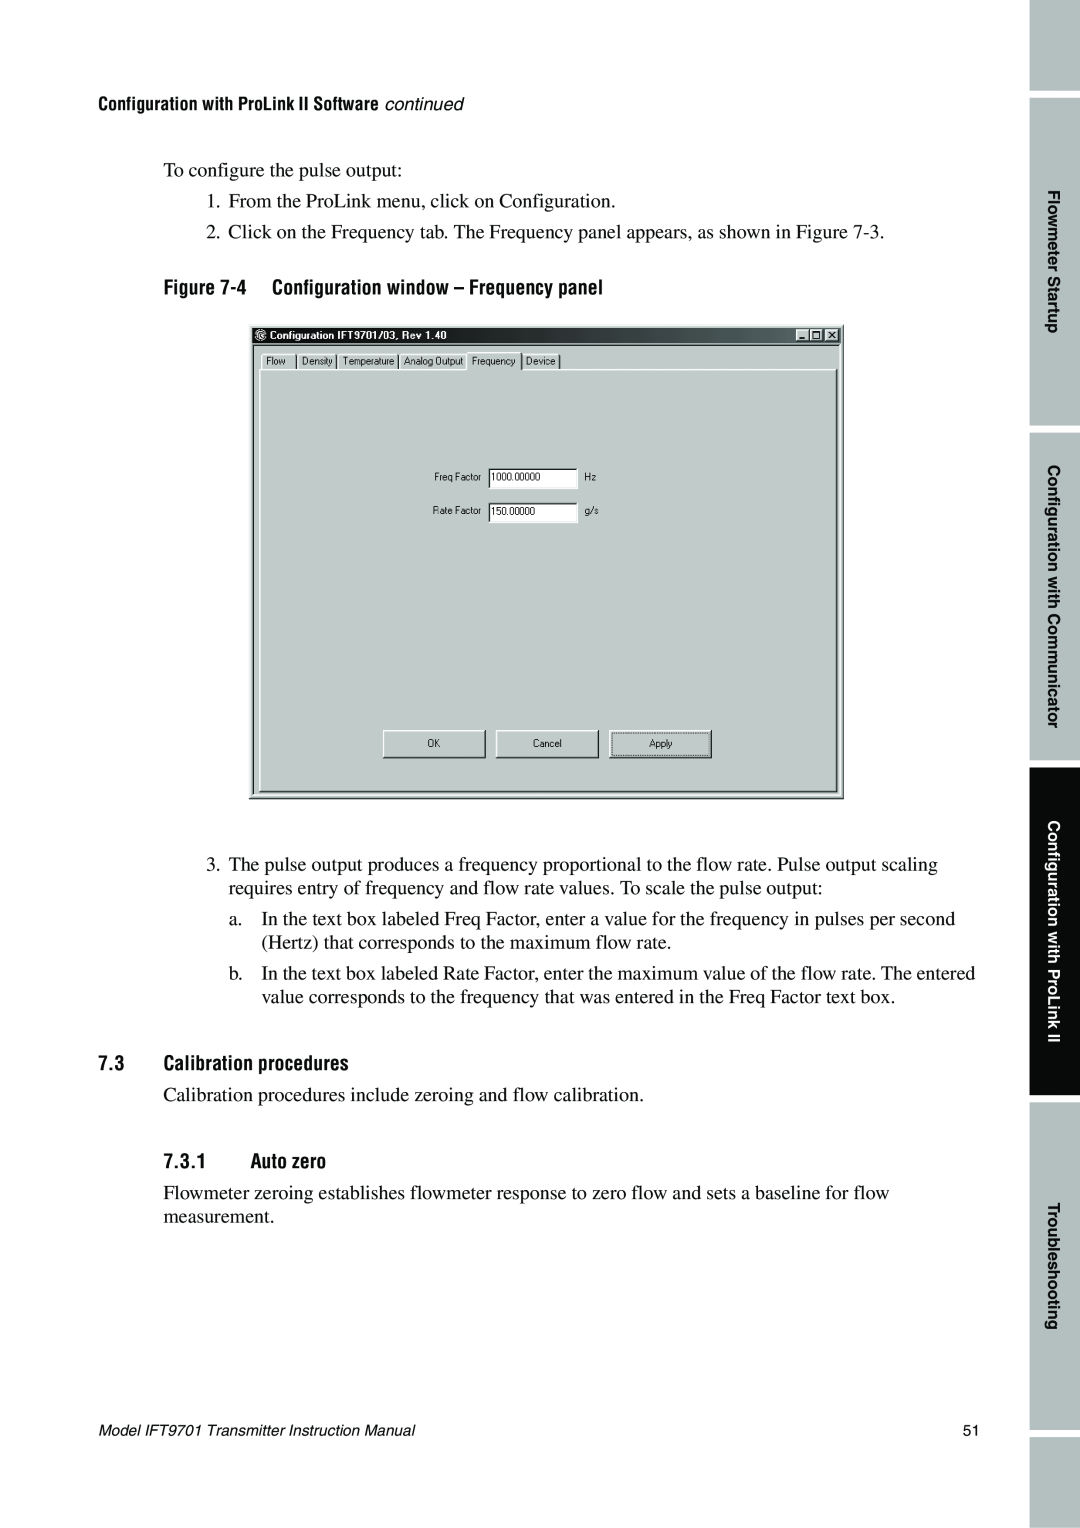 Emerson IFT9701 instruction manual 4Configuration window - Frequency panel, 7.3Calibration procedures, 7.3.1Auto zero 